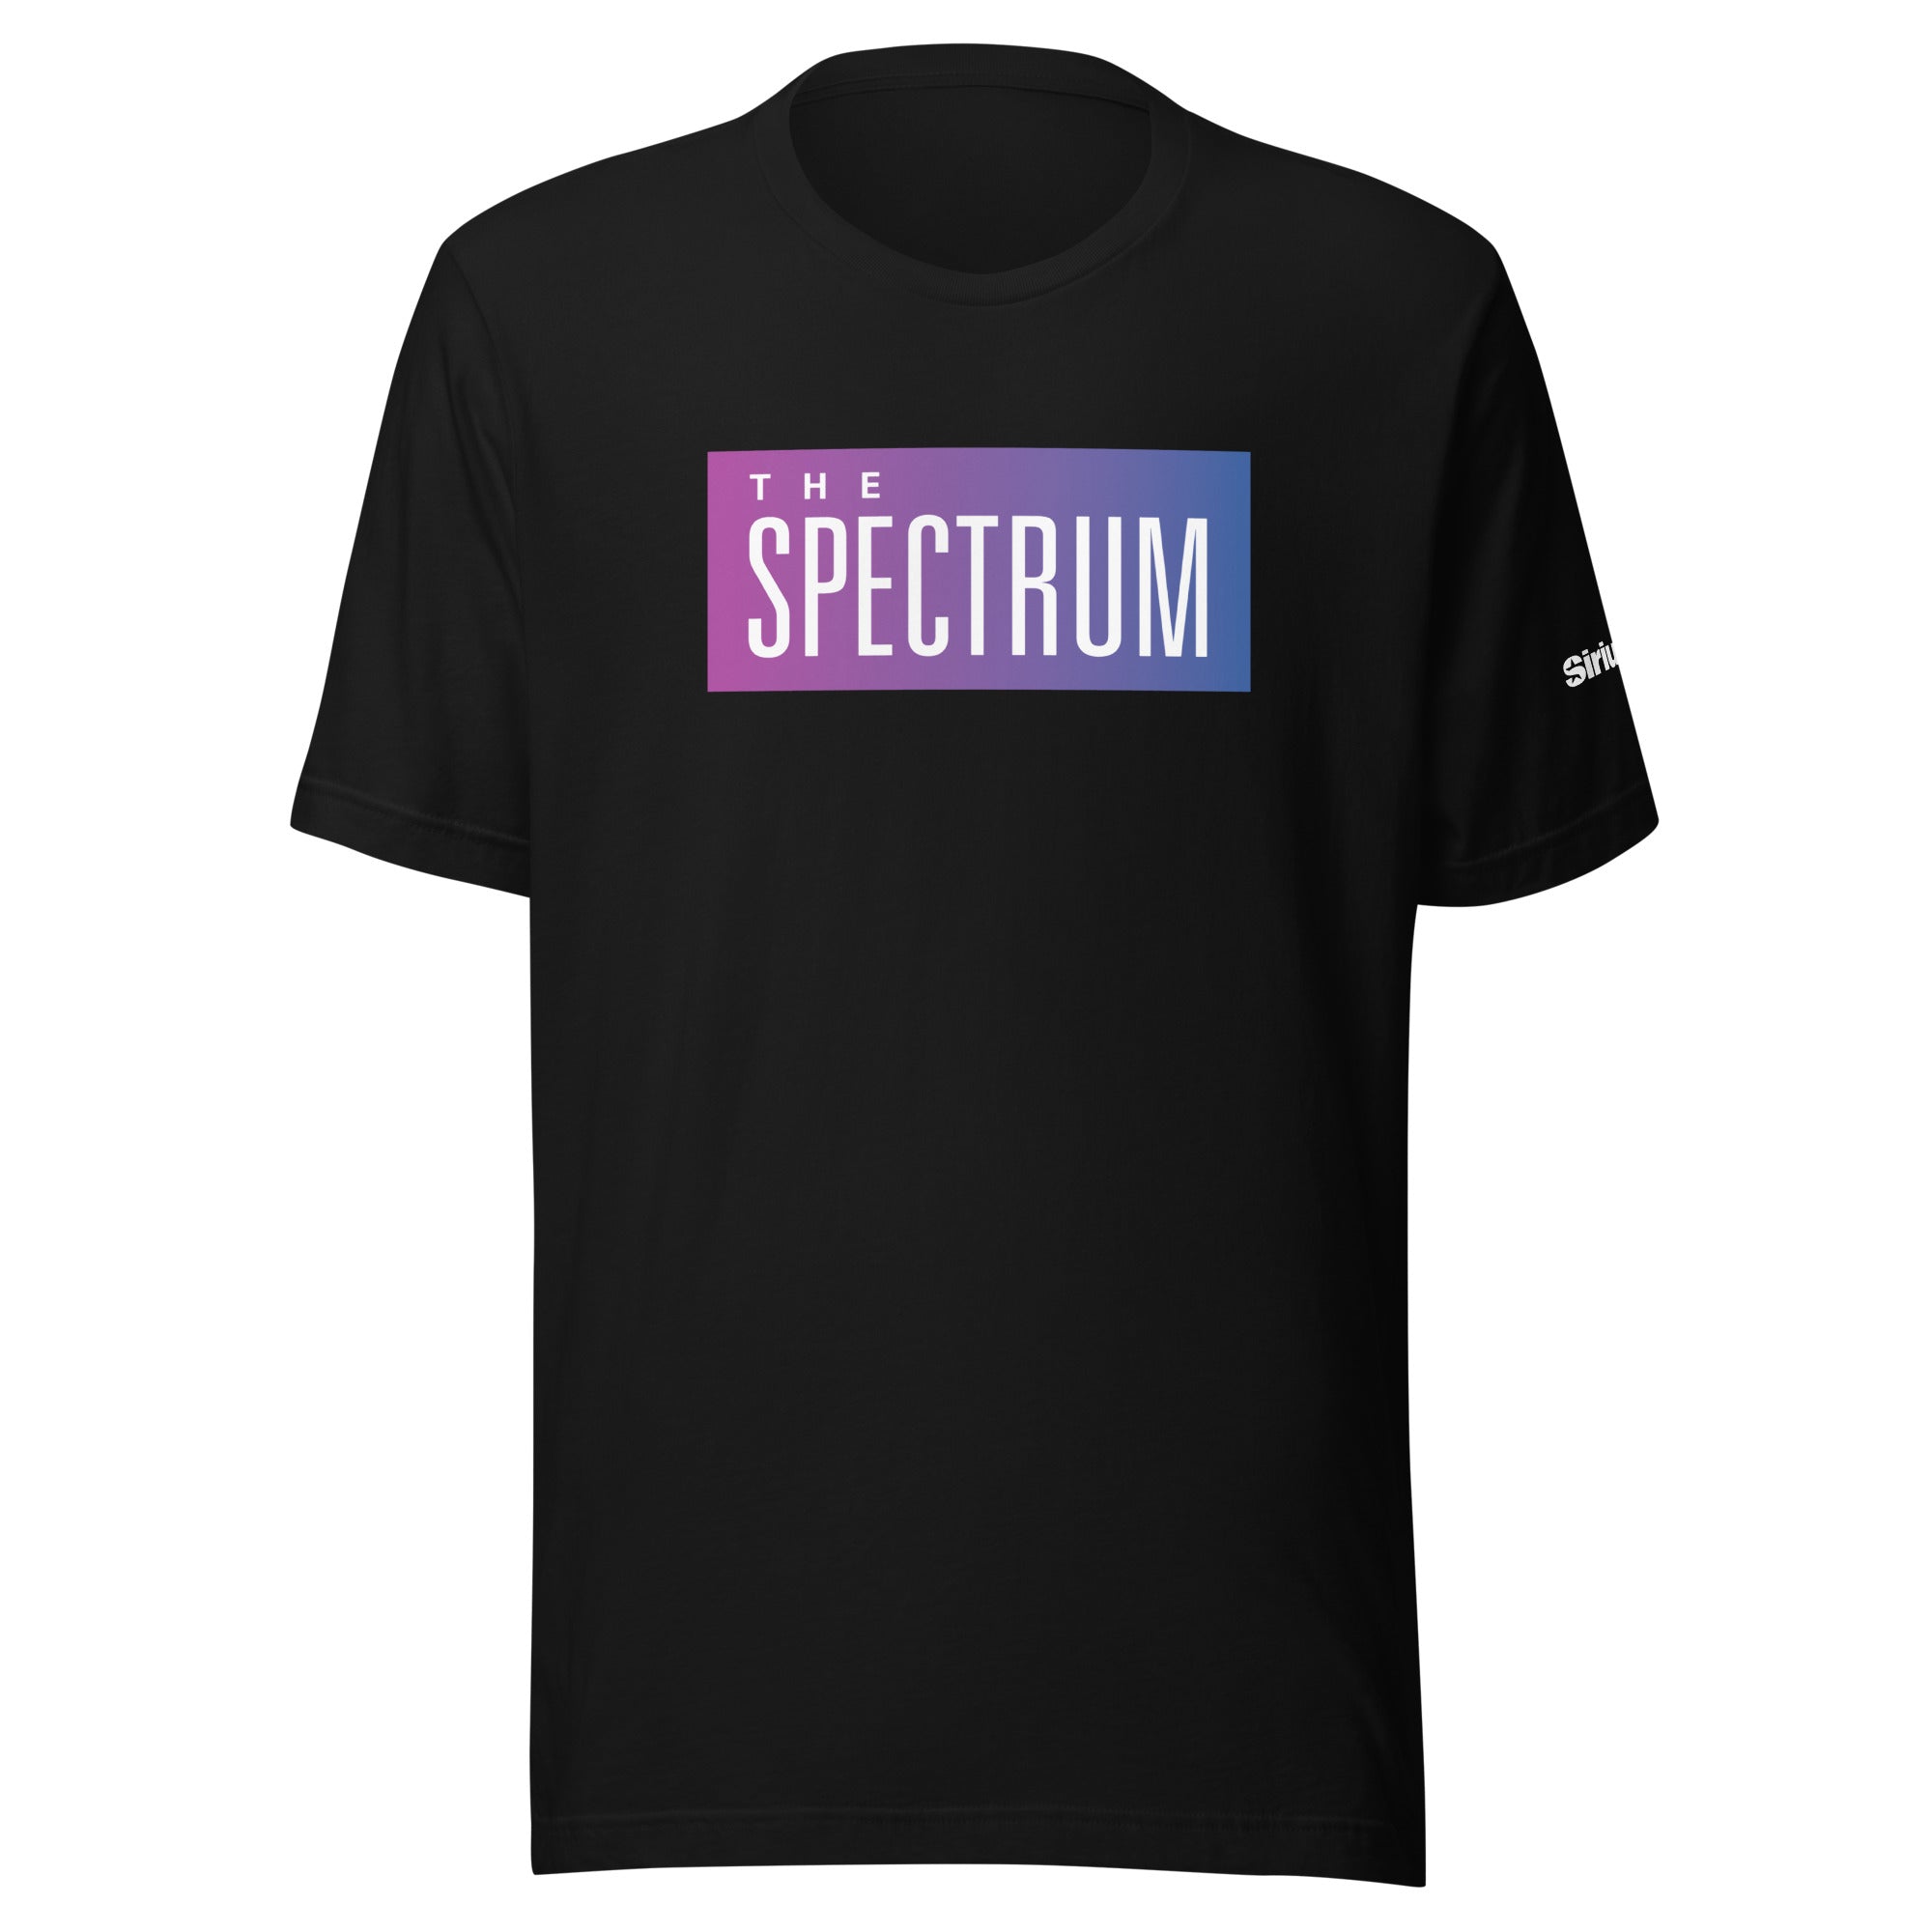 The Spectrum: T-shirt (Black)